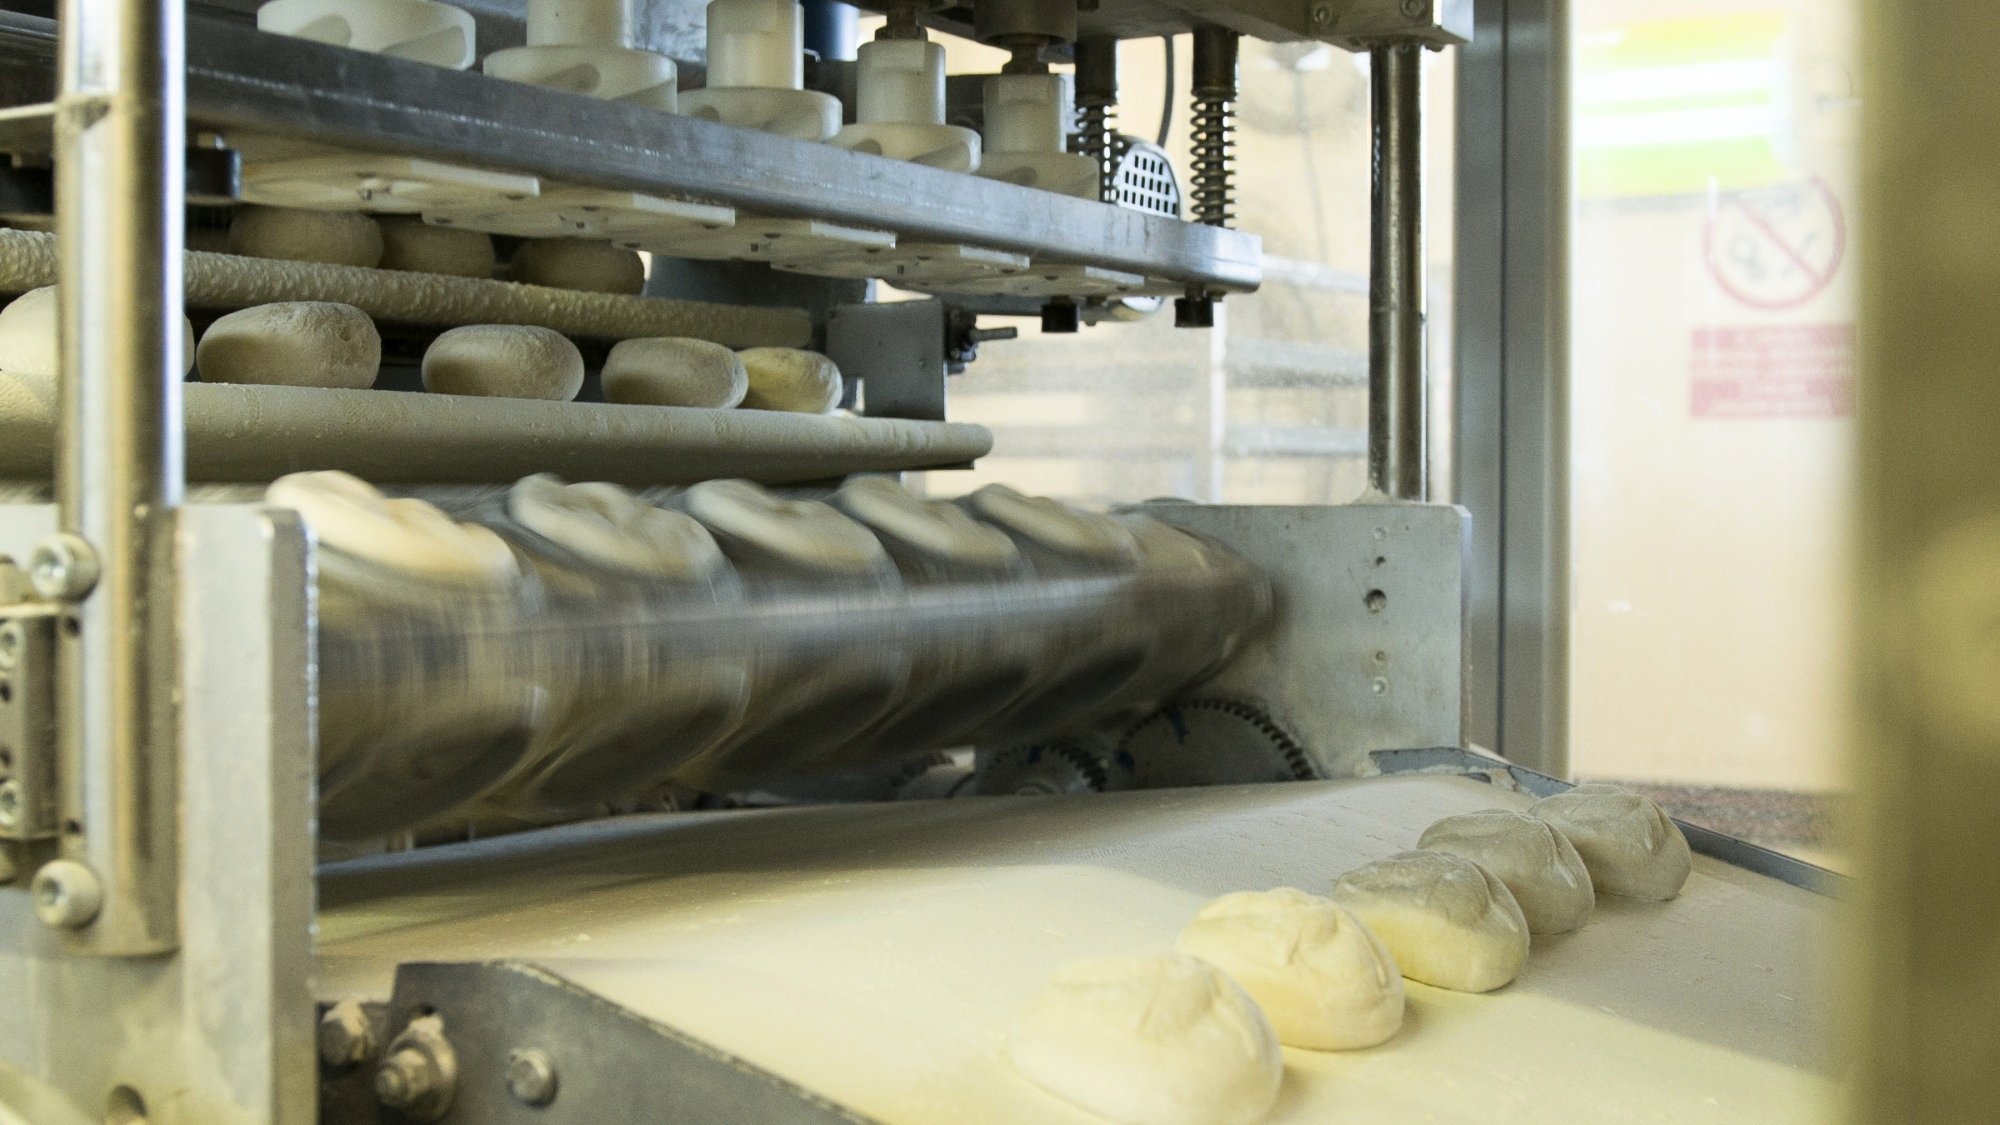 Sottoriva: the bread making evolution